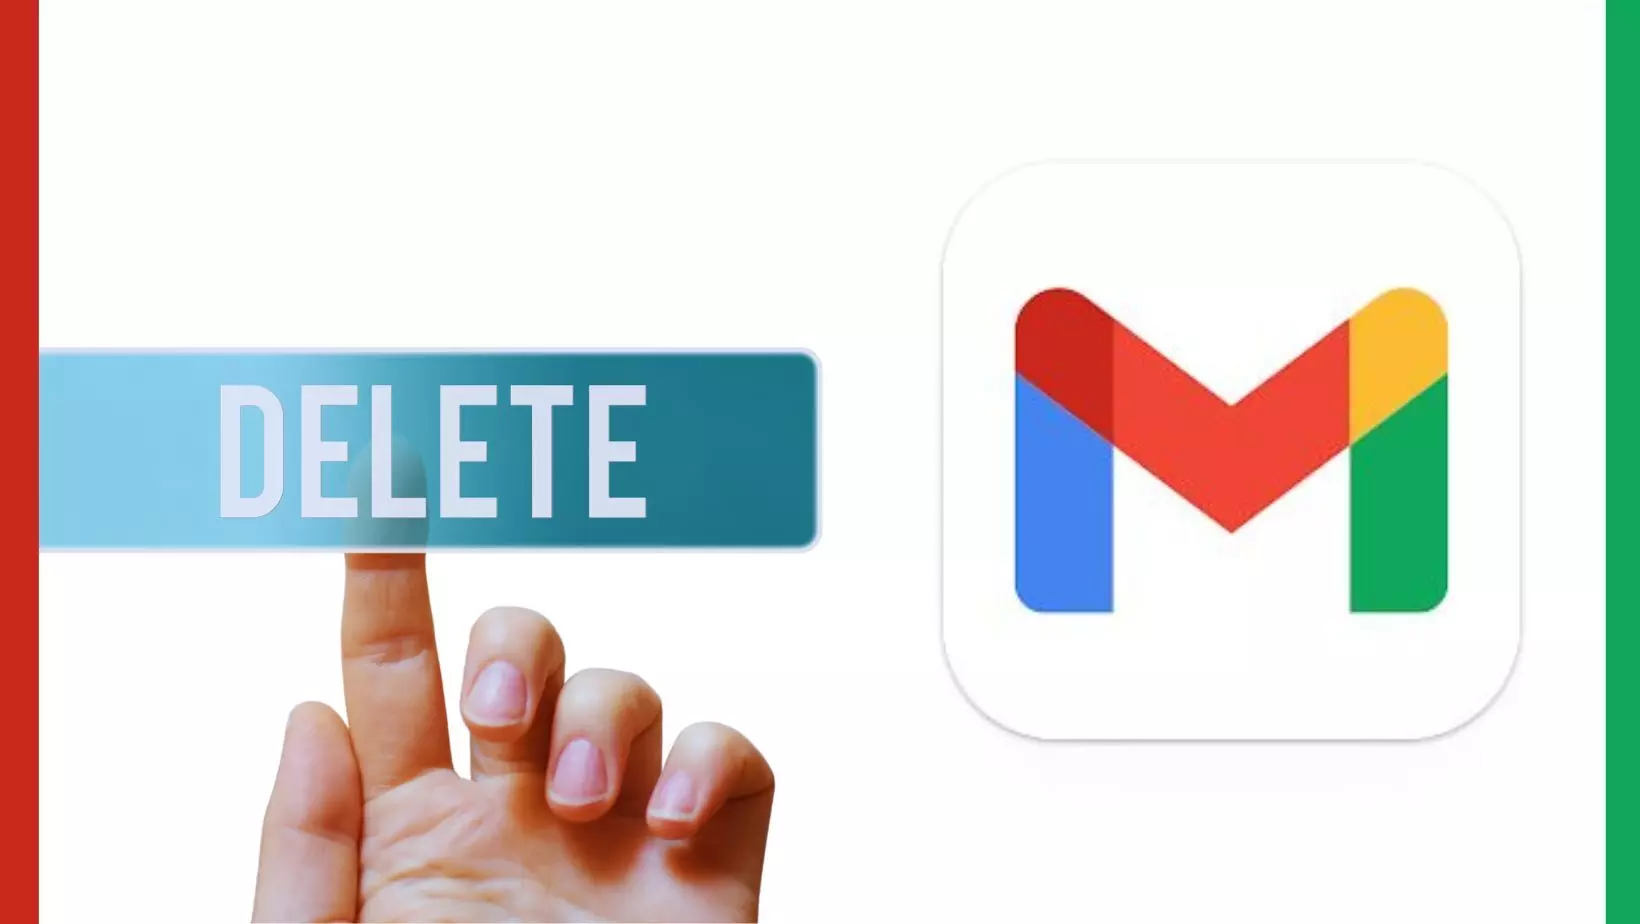 gmail logo and delete alert